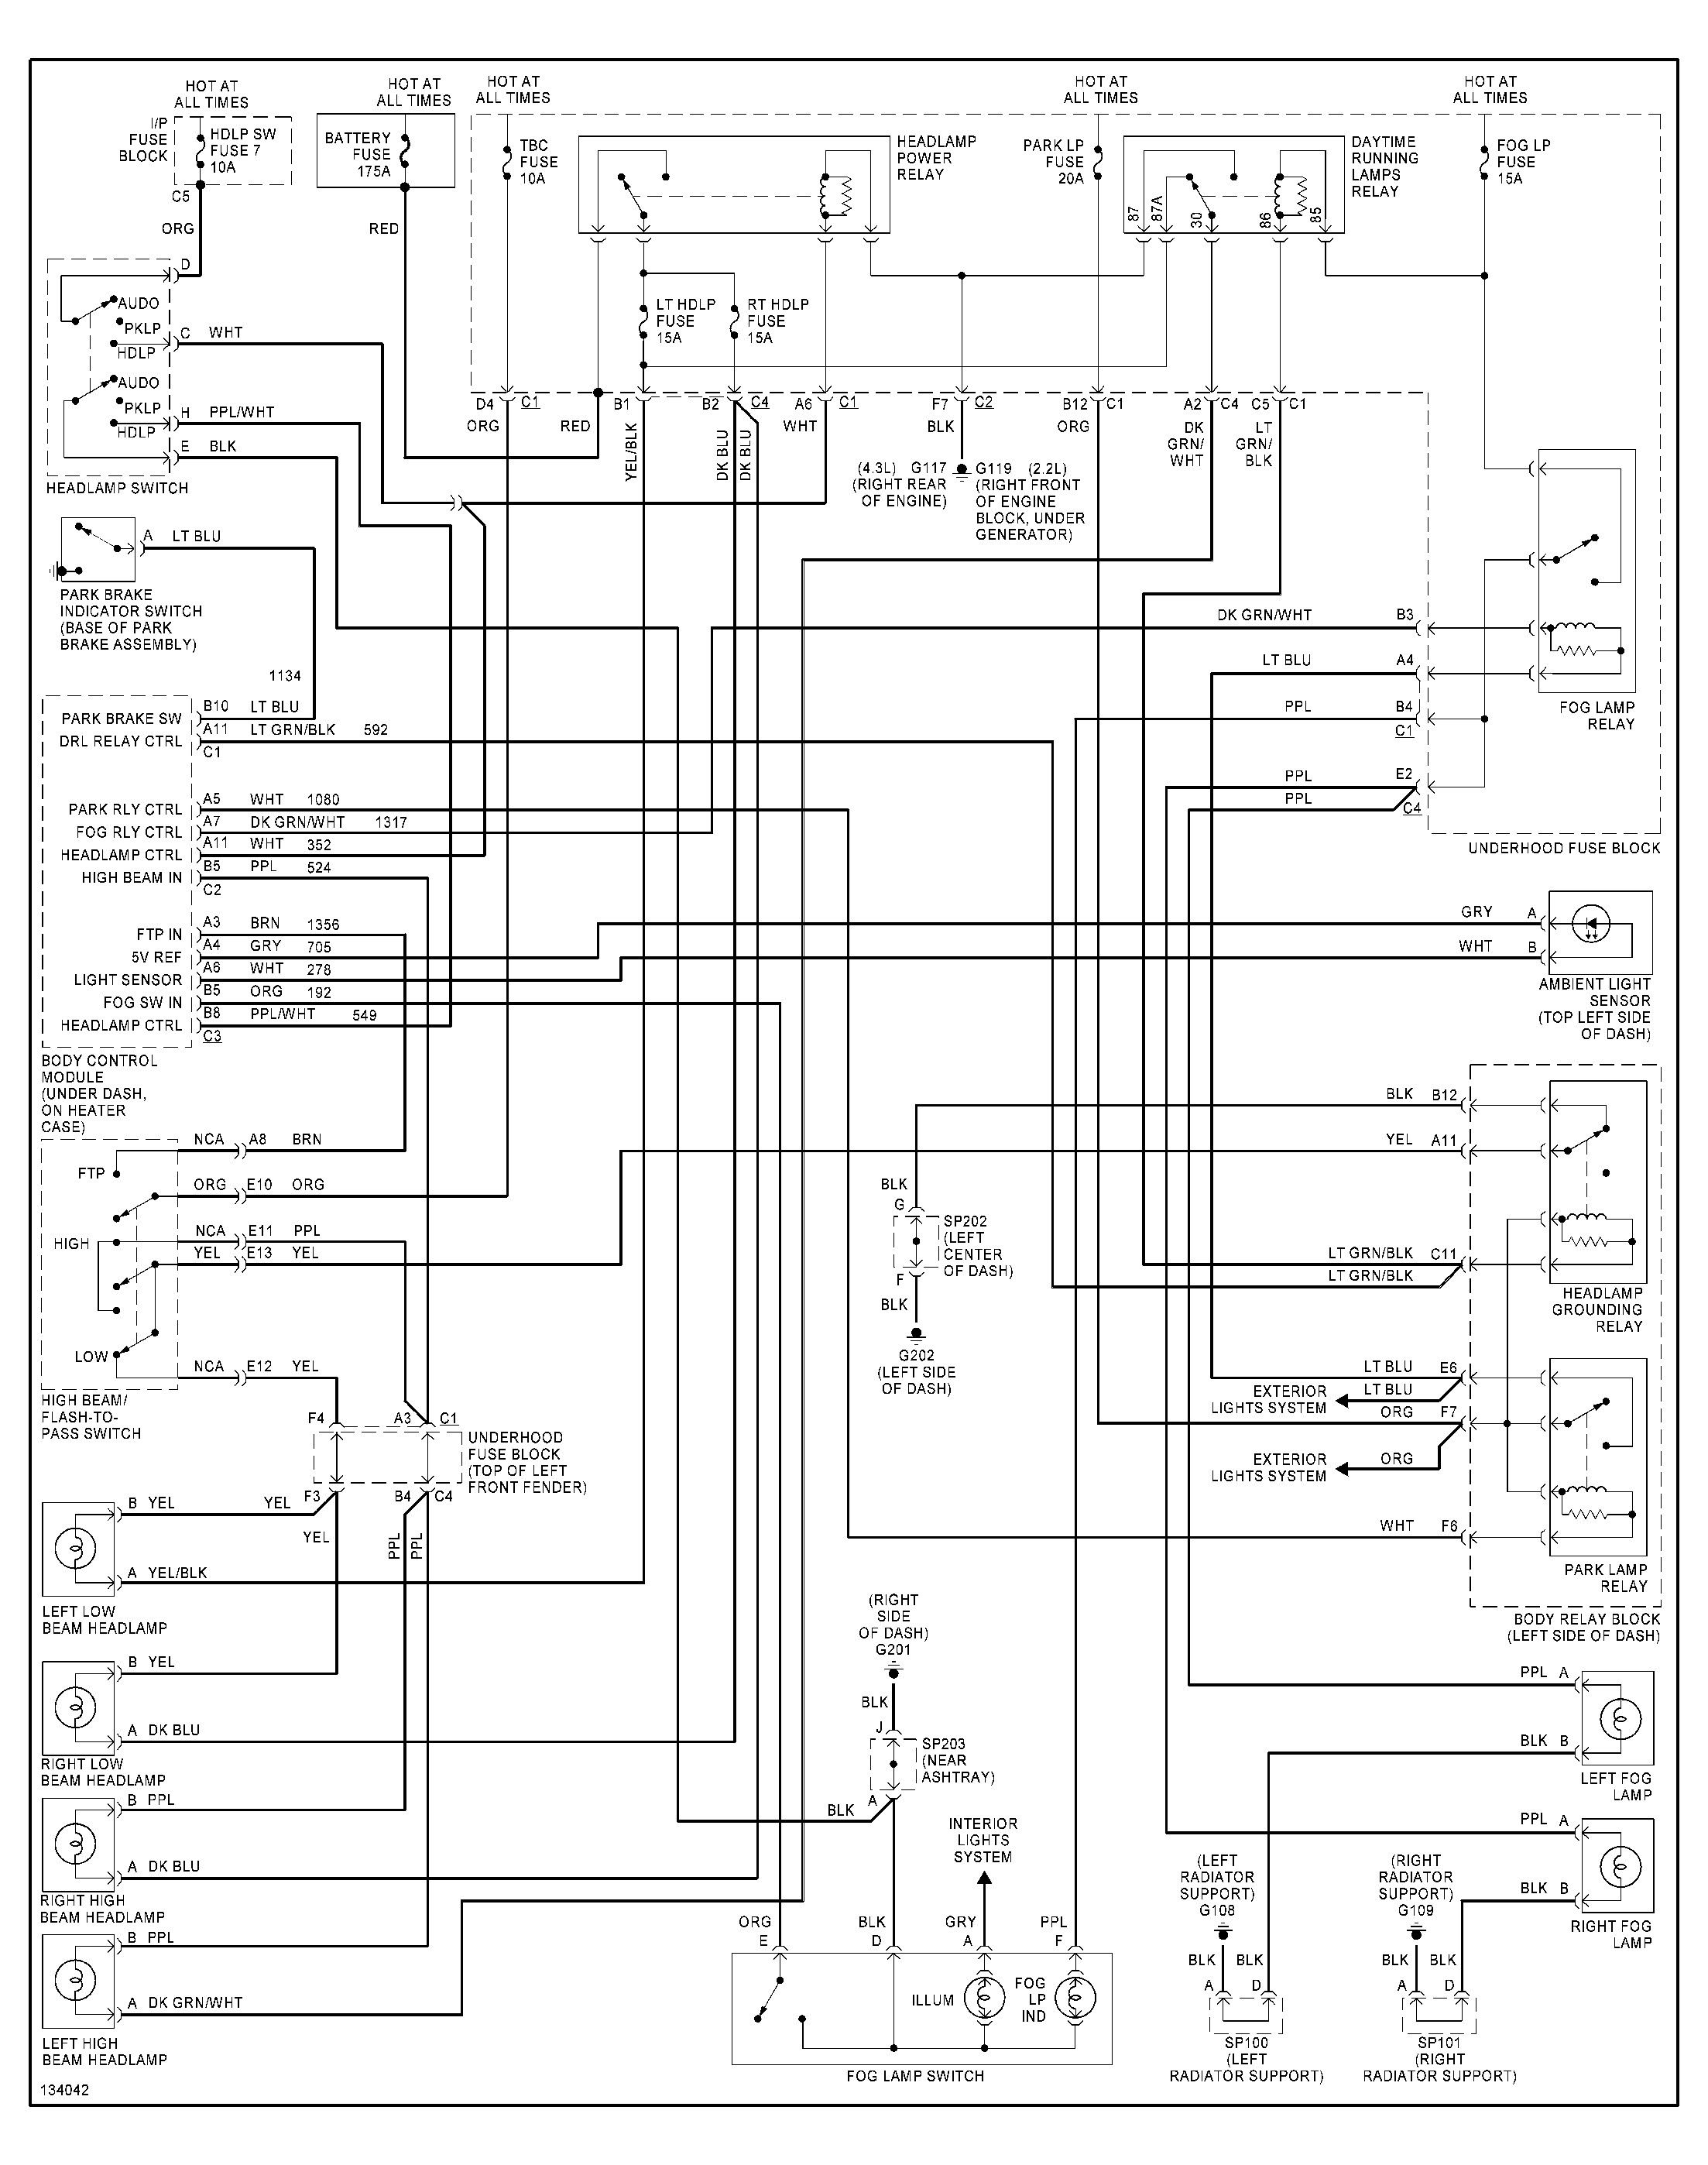 2000 Chevy S10 Engine Diagram 91 S10 Truck Radio Wiring Diagram Reinvent Your Wiring Diagram • Of 2000 Chevy S10 Engine Diagram